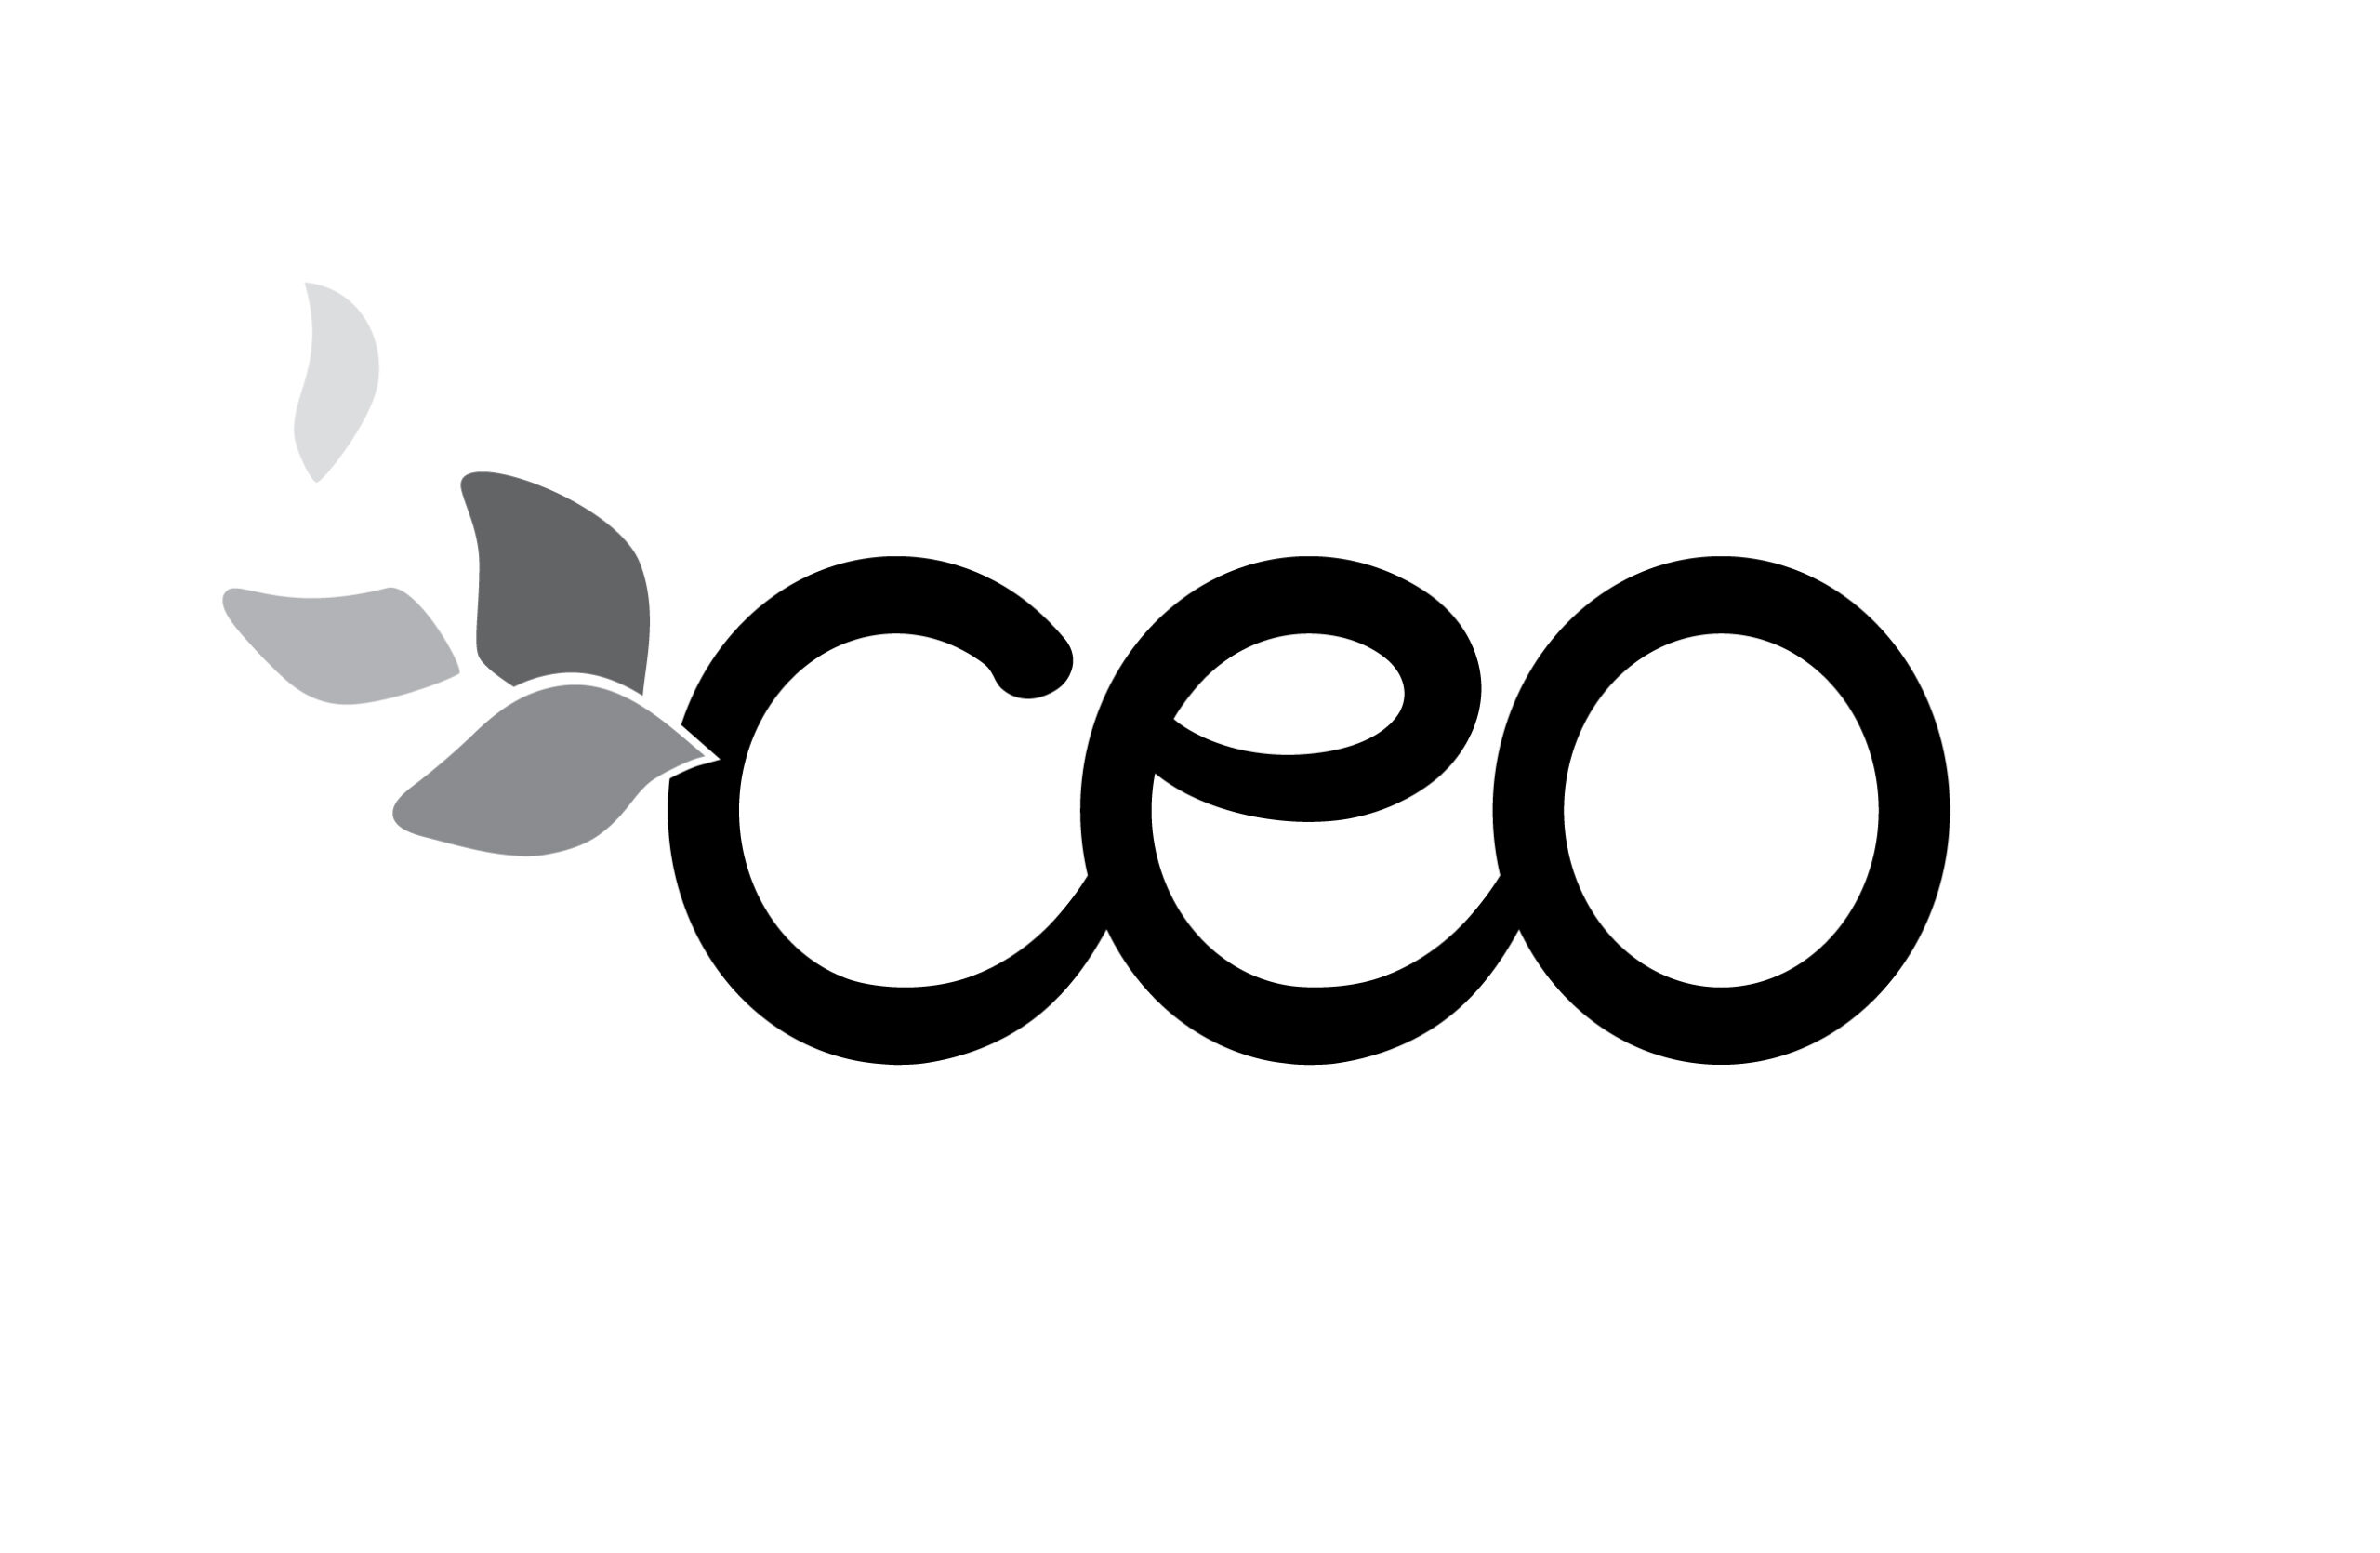 CEO Logo JPG - Black and White